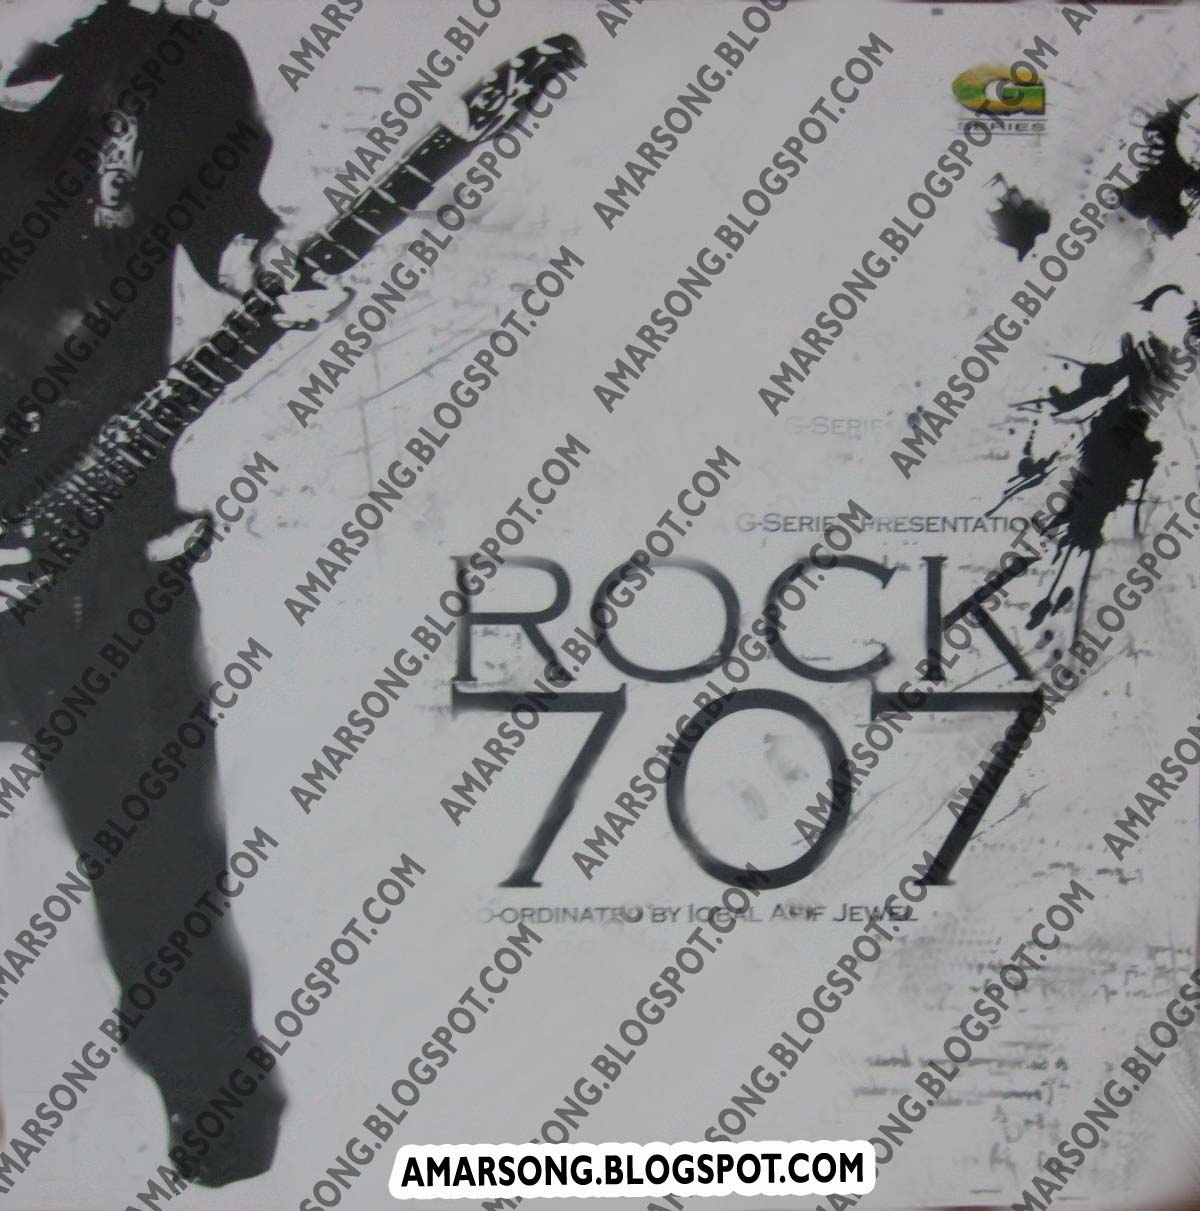 Rock 707 - Band Mixed (Eid Album 2011)